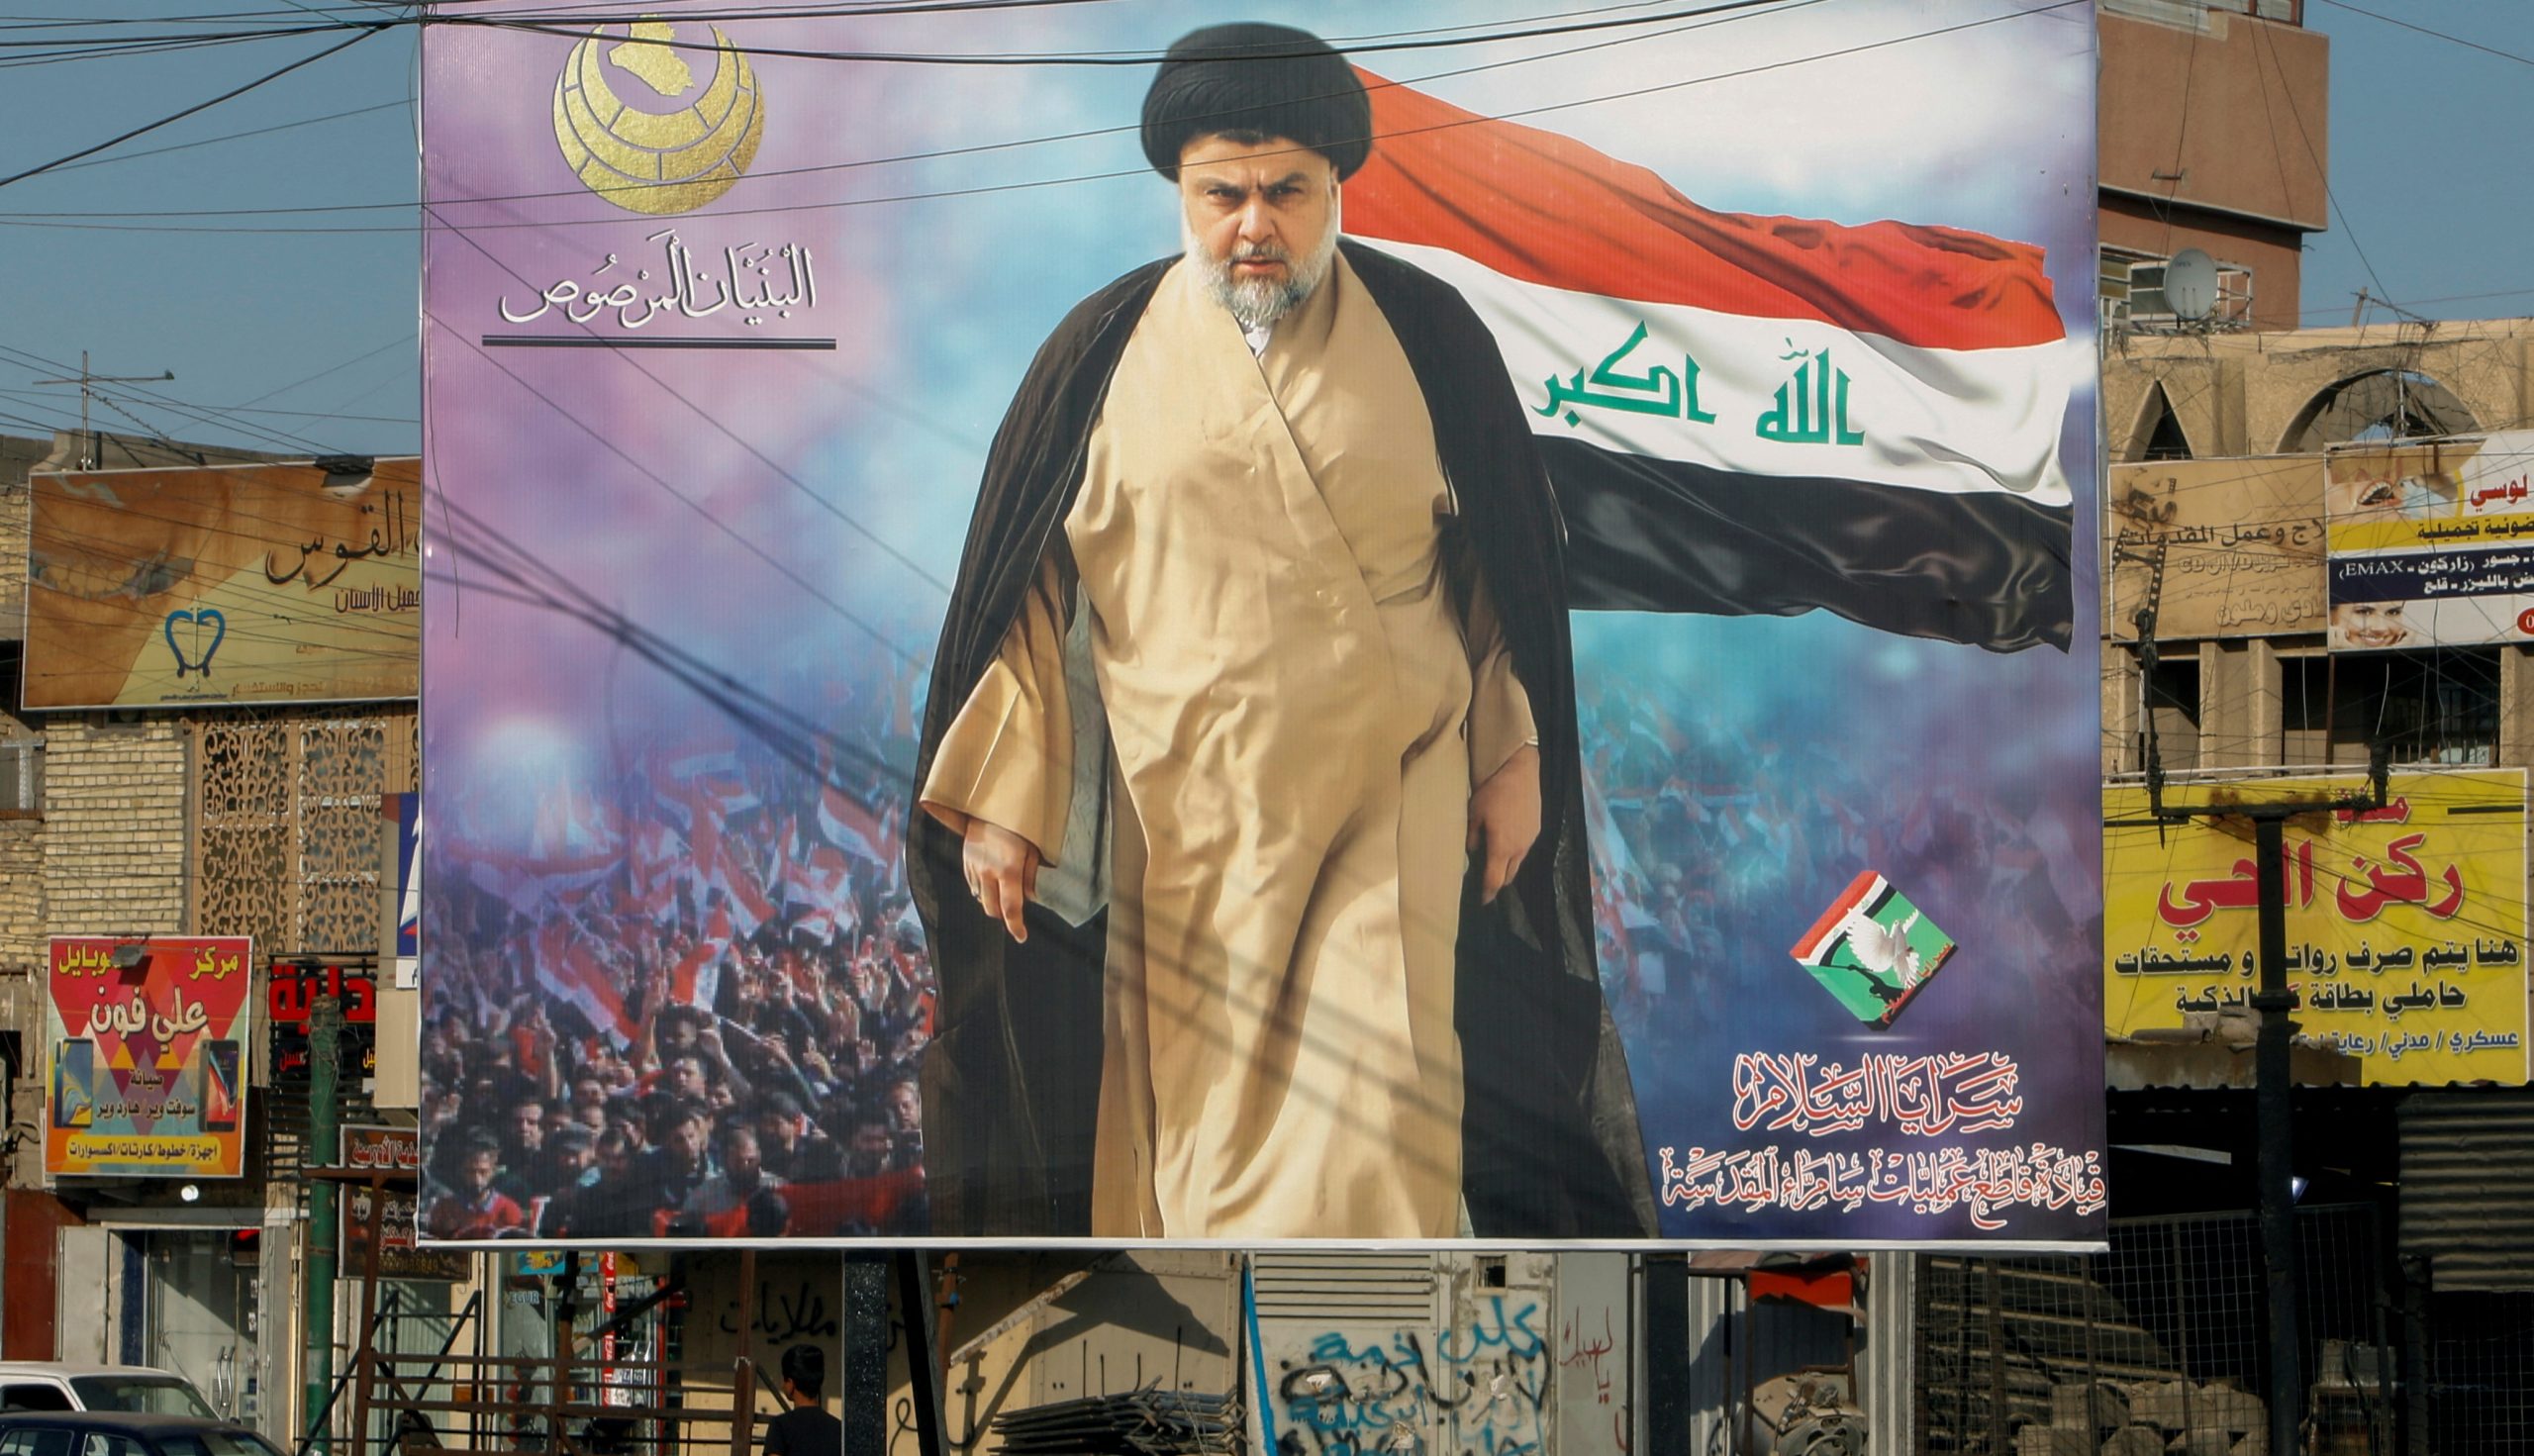 The immutable Muqtada al-Sadr loses a battle against Iran